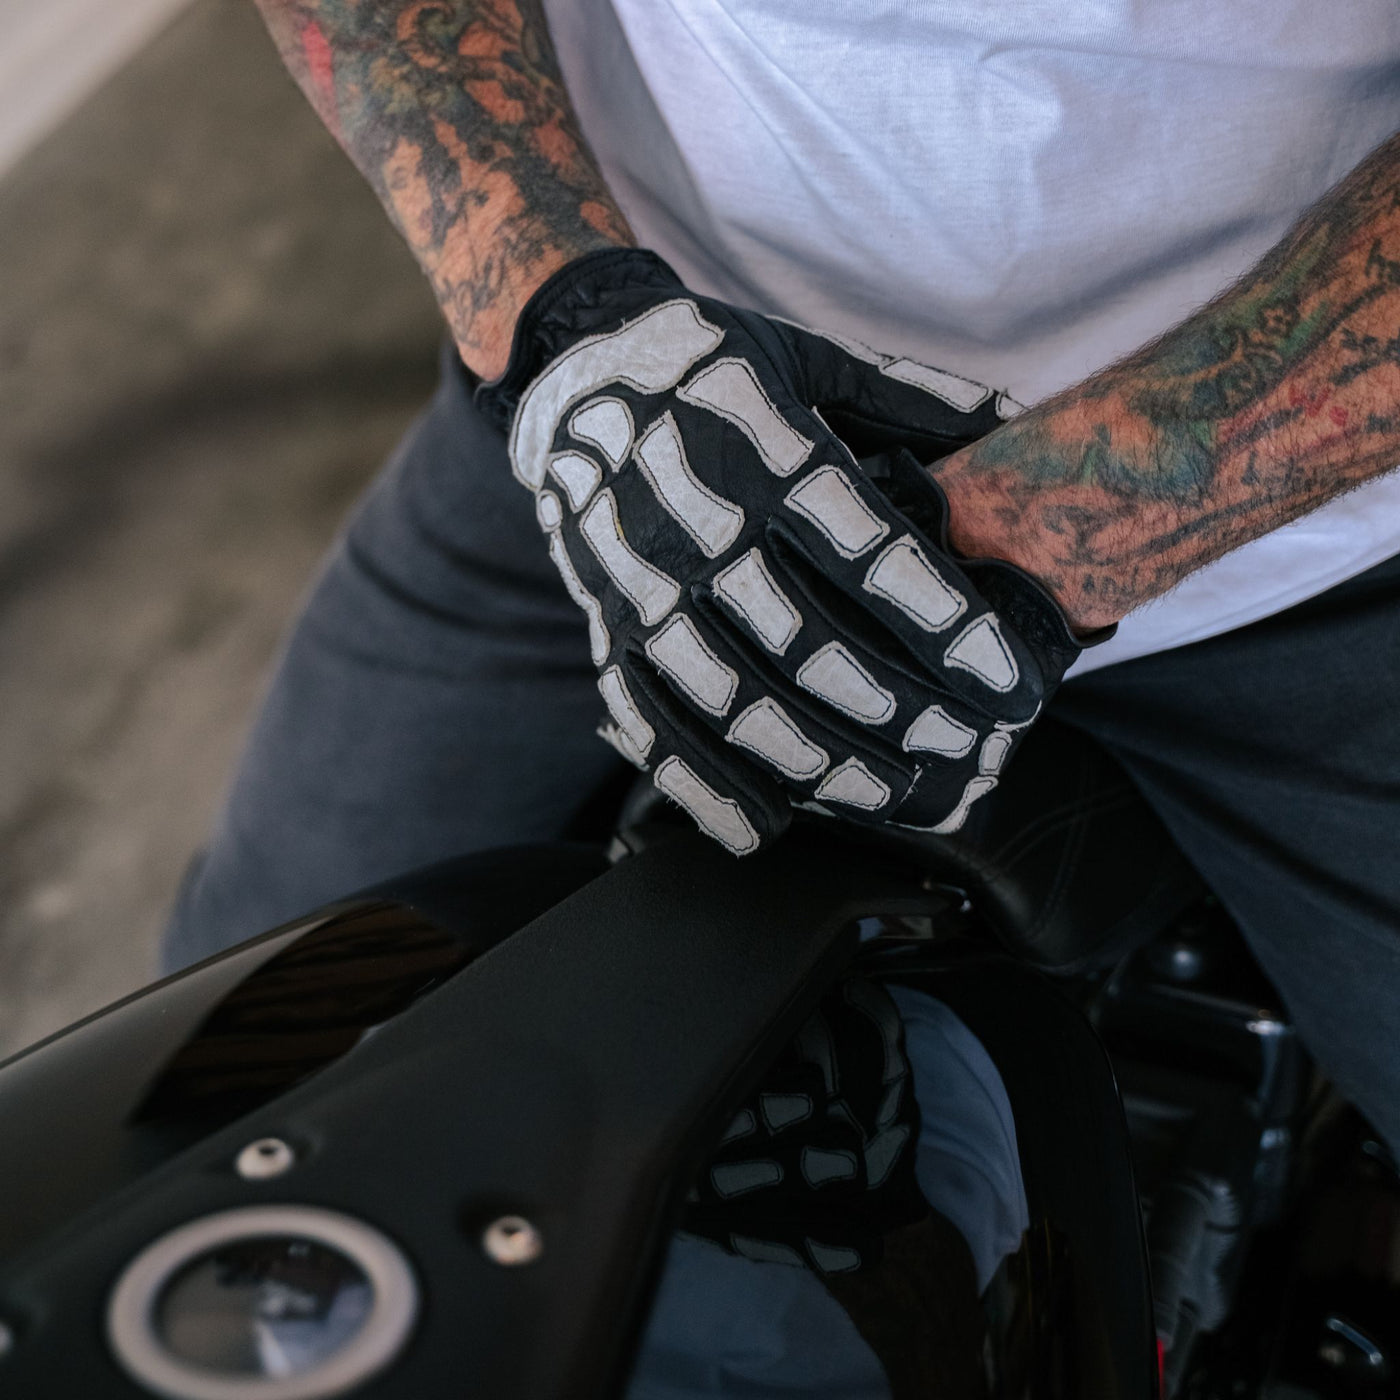 Skeleton Leather Motorcycle Glove - Black-White